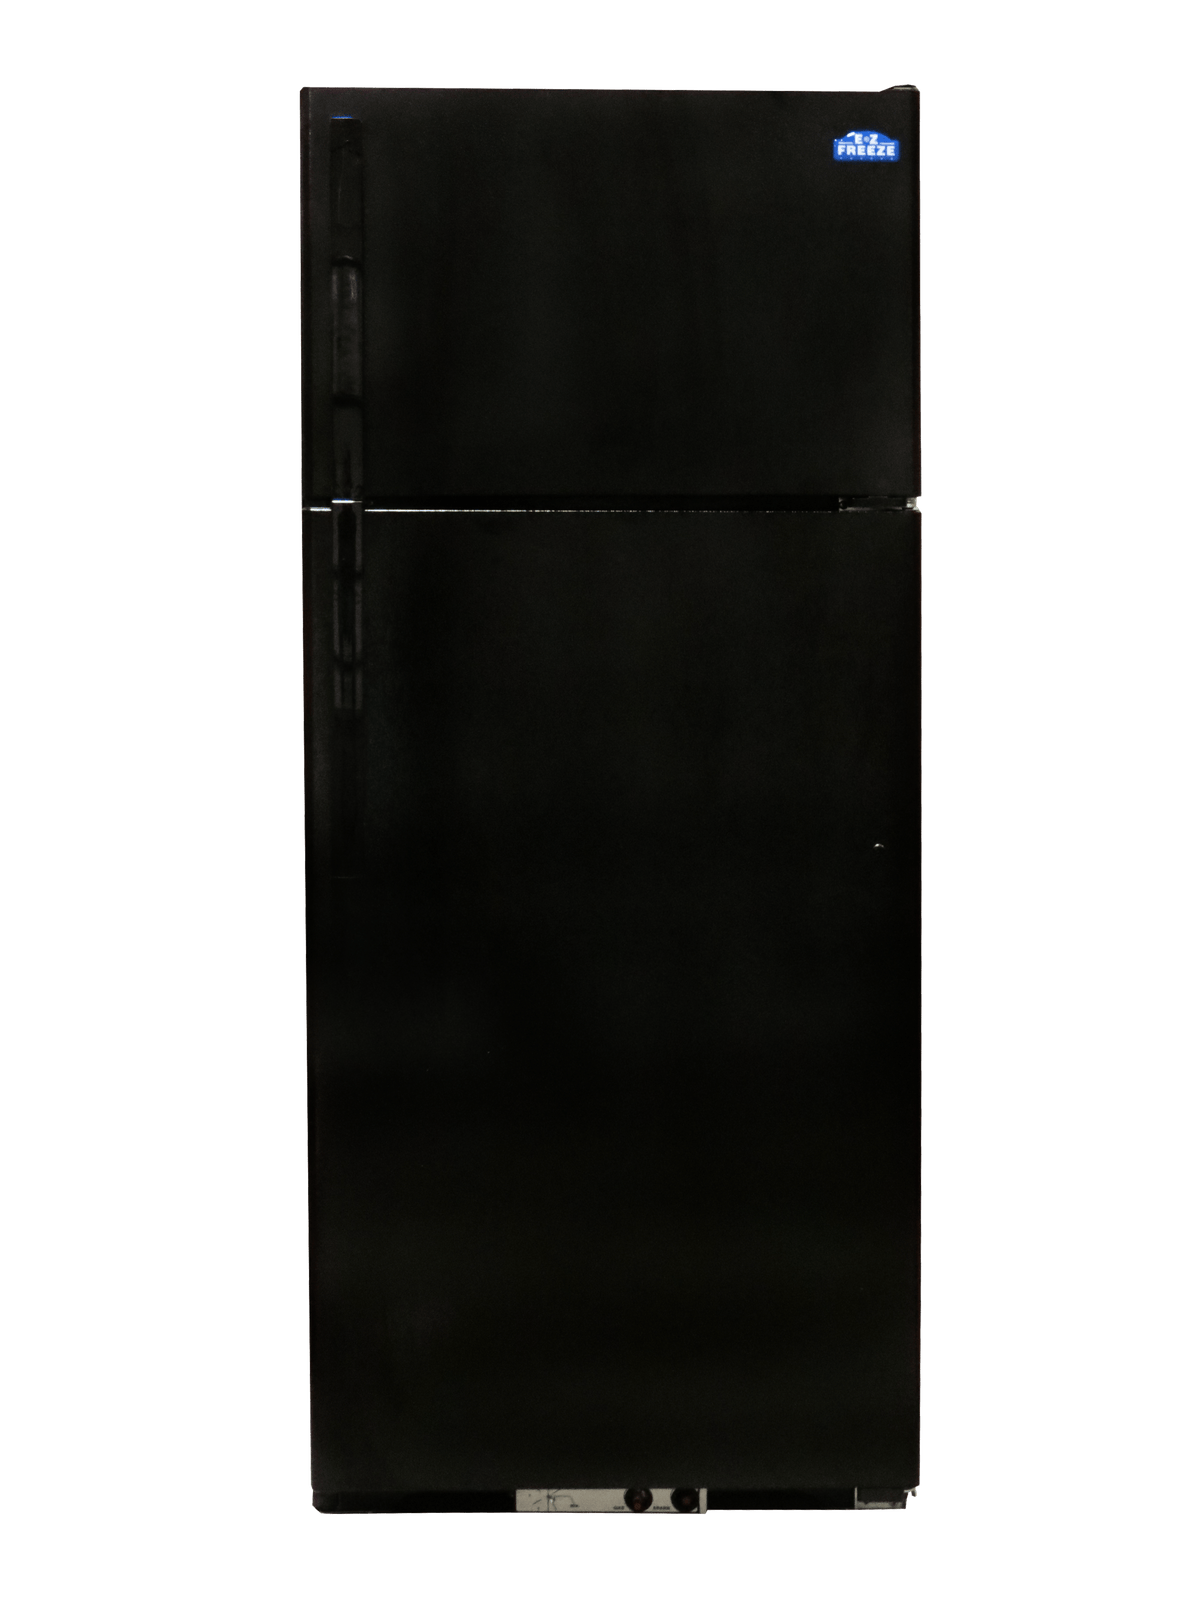 EZ Freeze Natural Gas Refrigerator EZ Freeze EZ-19BNG Natural Gas Refrigerator-Freezer in Black 19 cu ft.